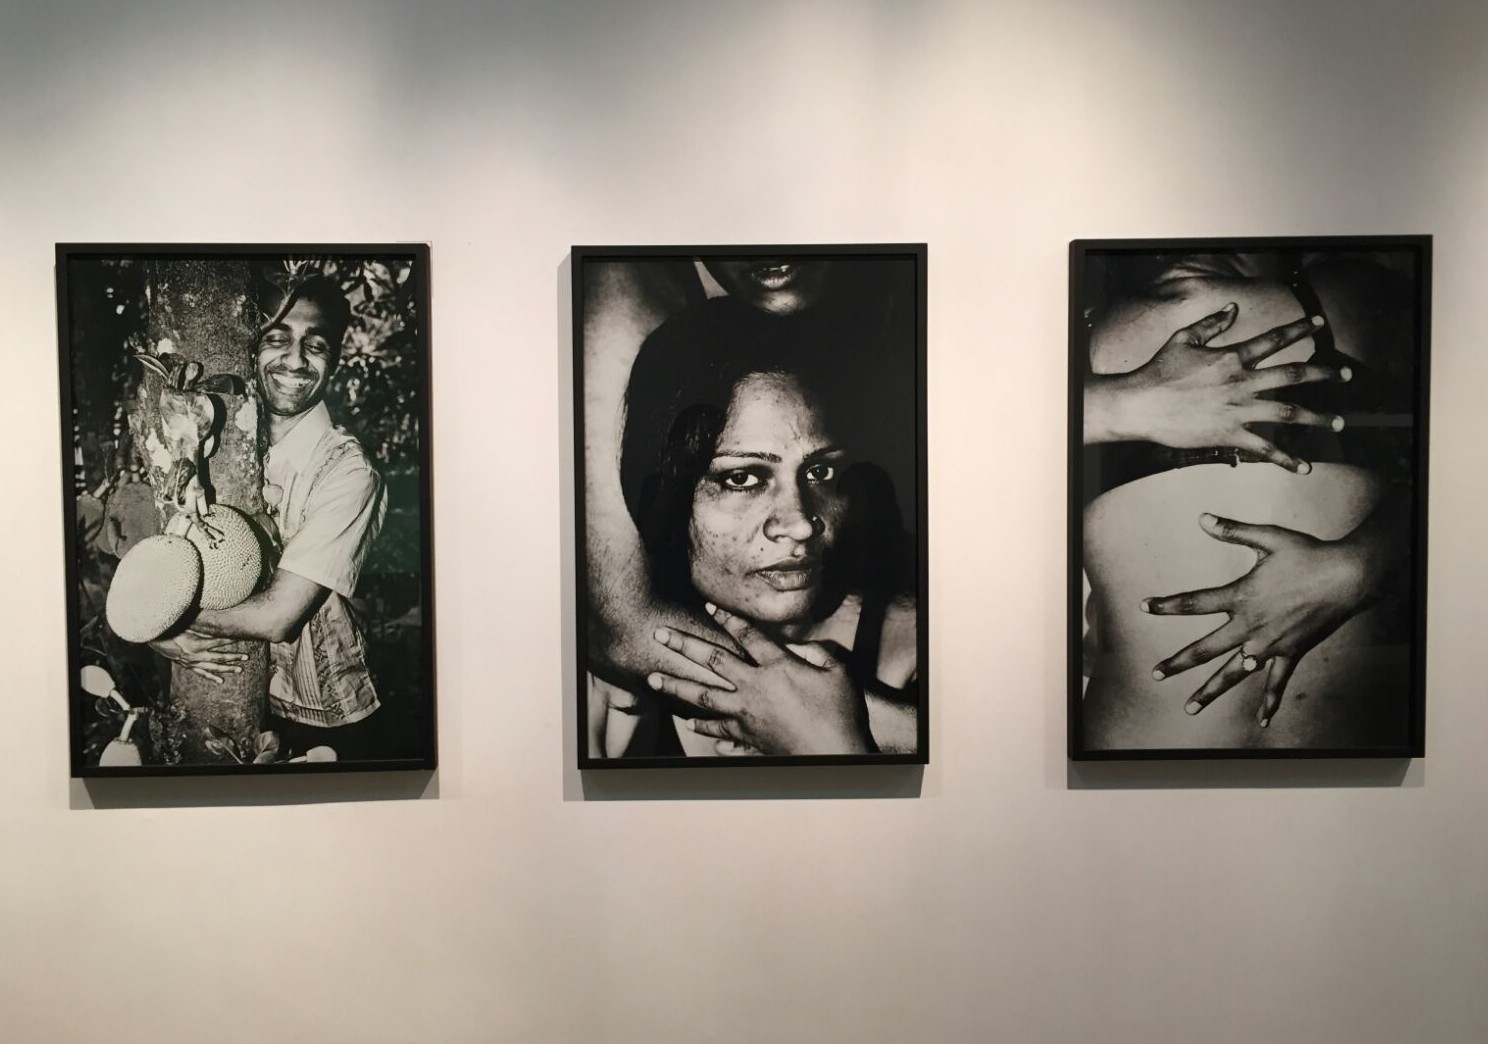 Dhaka born Gazi Nafis Ahmed's photographs focus on intimacy and subtle moments shared between his subjects. At the Samdani Art Award #dhakaartsummit via Sonal Singh, Christies